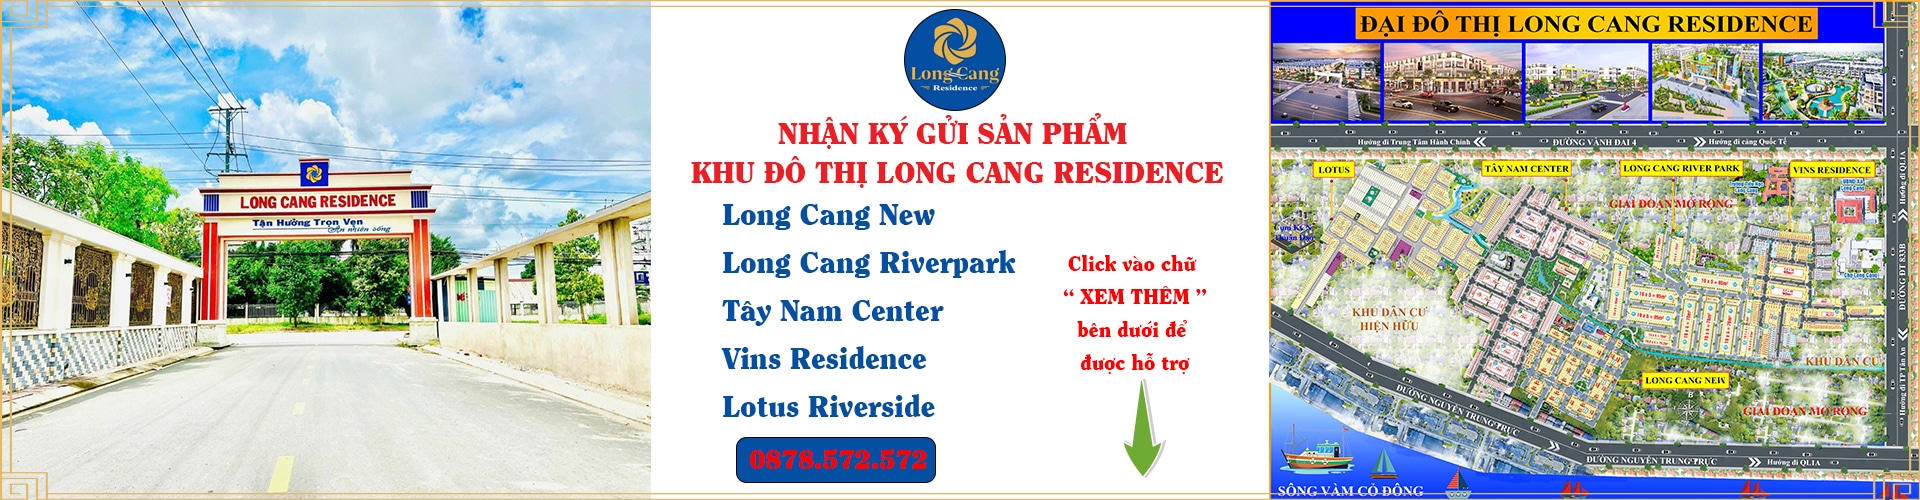 long cang residence